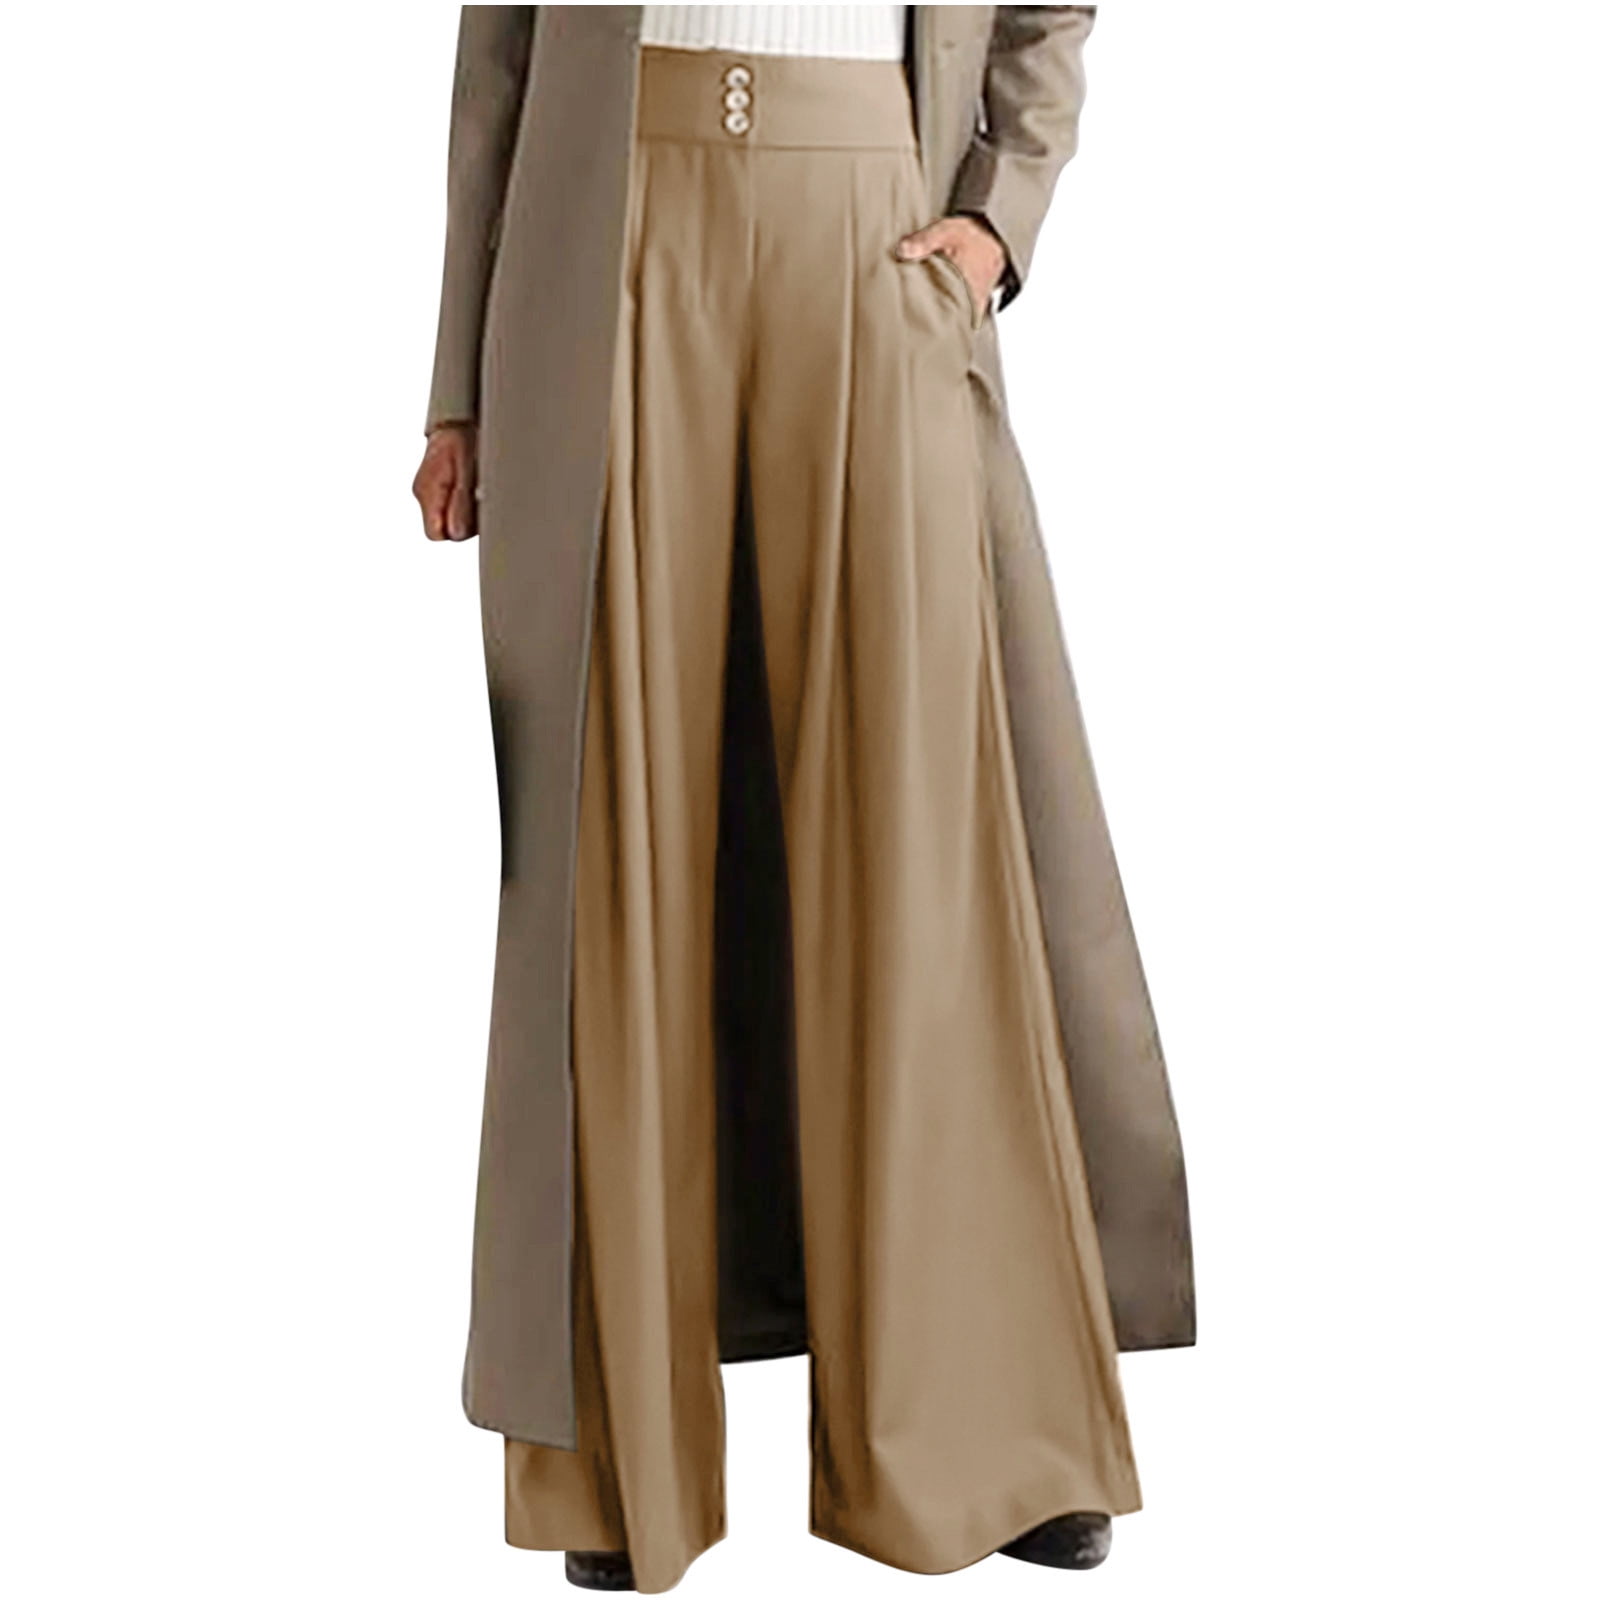 YUNAFFT Yoga Pants for Women Clearance Plus Size Women's Fashion